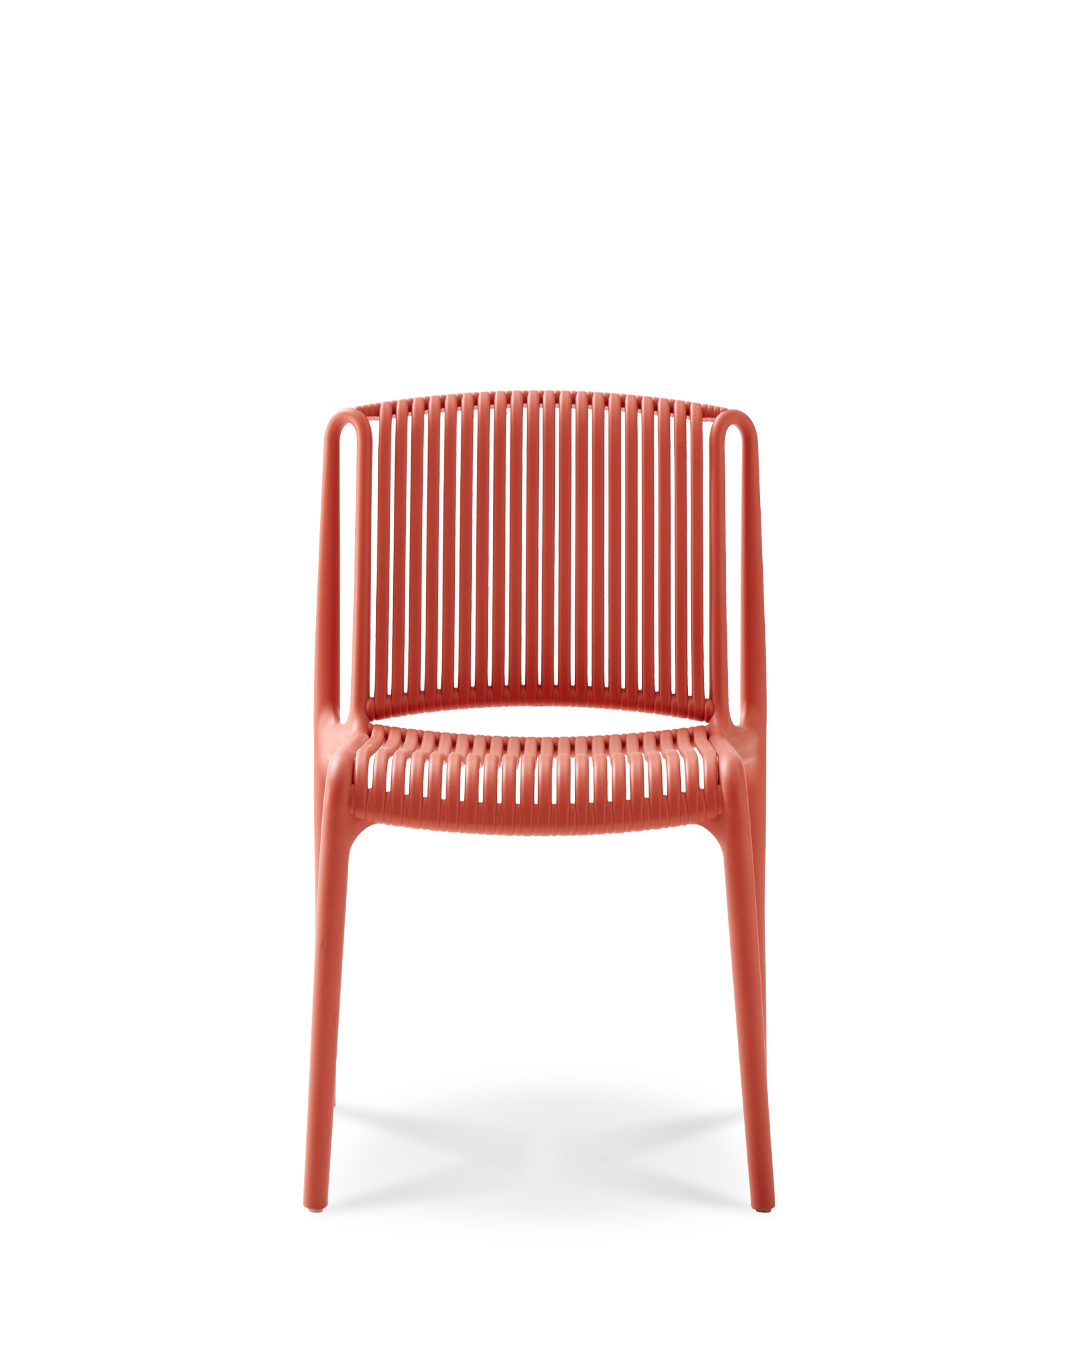 Elpis Plastic Chair Chestnut Red